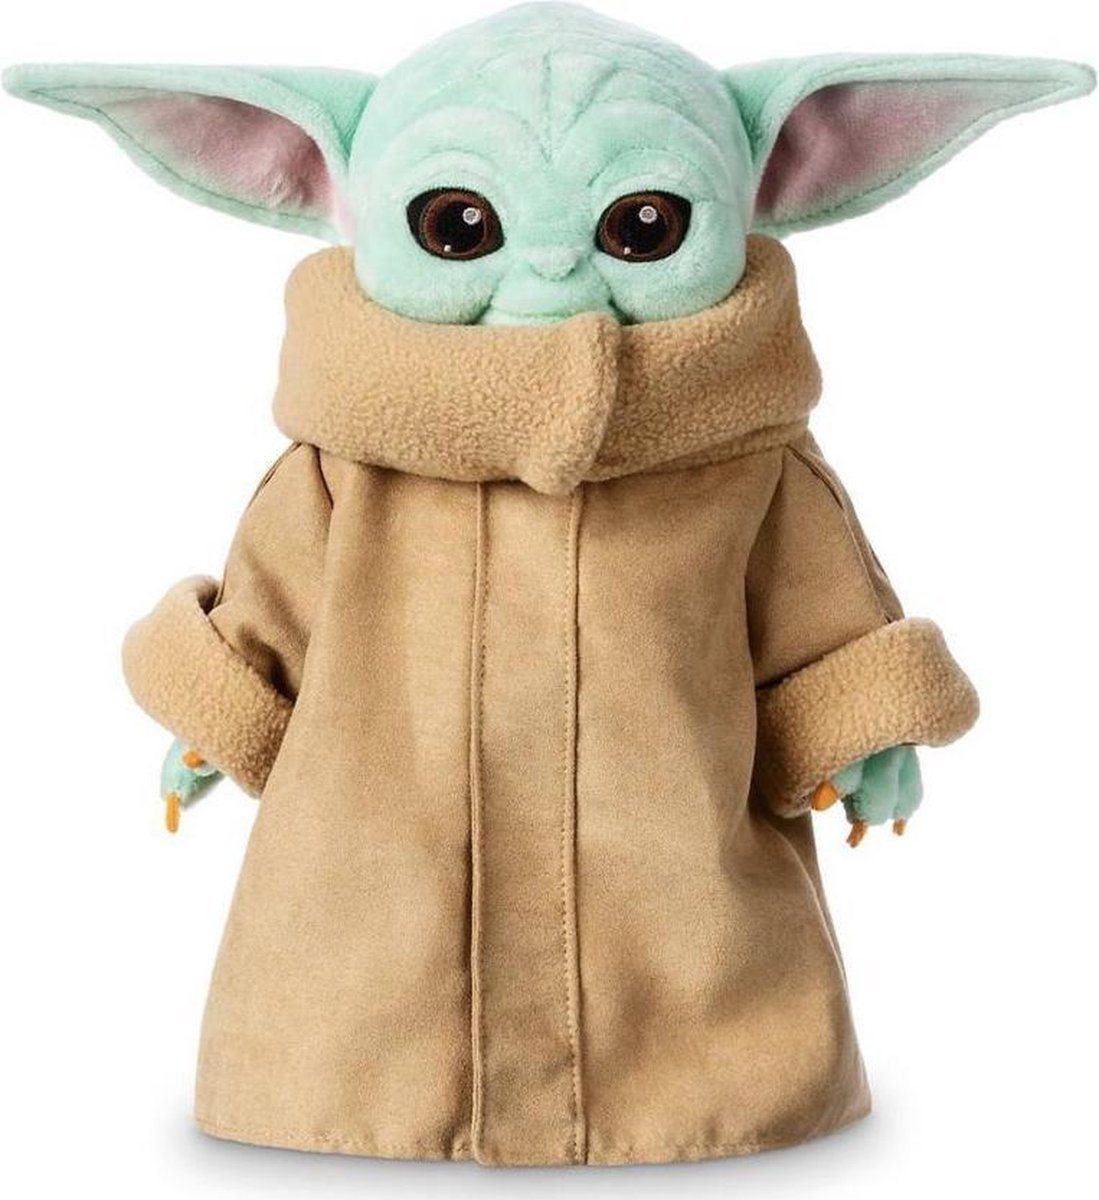 Baby Yoda knuffel - 30 cm - Pluche - Star Wars - The Mandalorian - The Child Groku - Plush - Pop - Star Wars